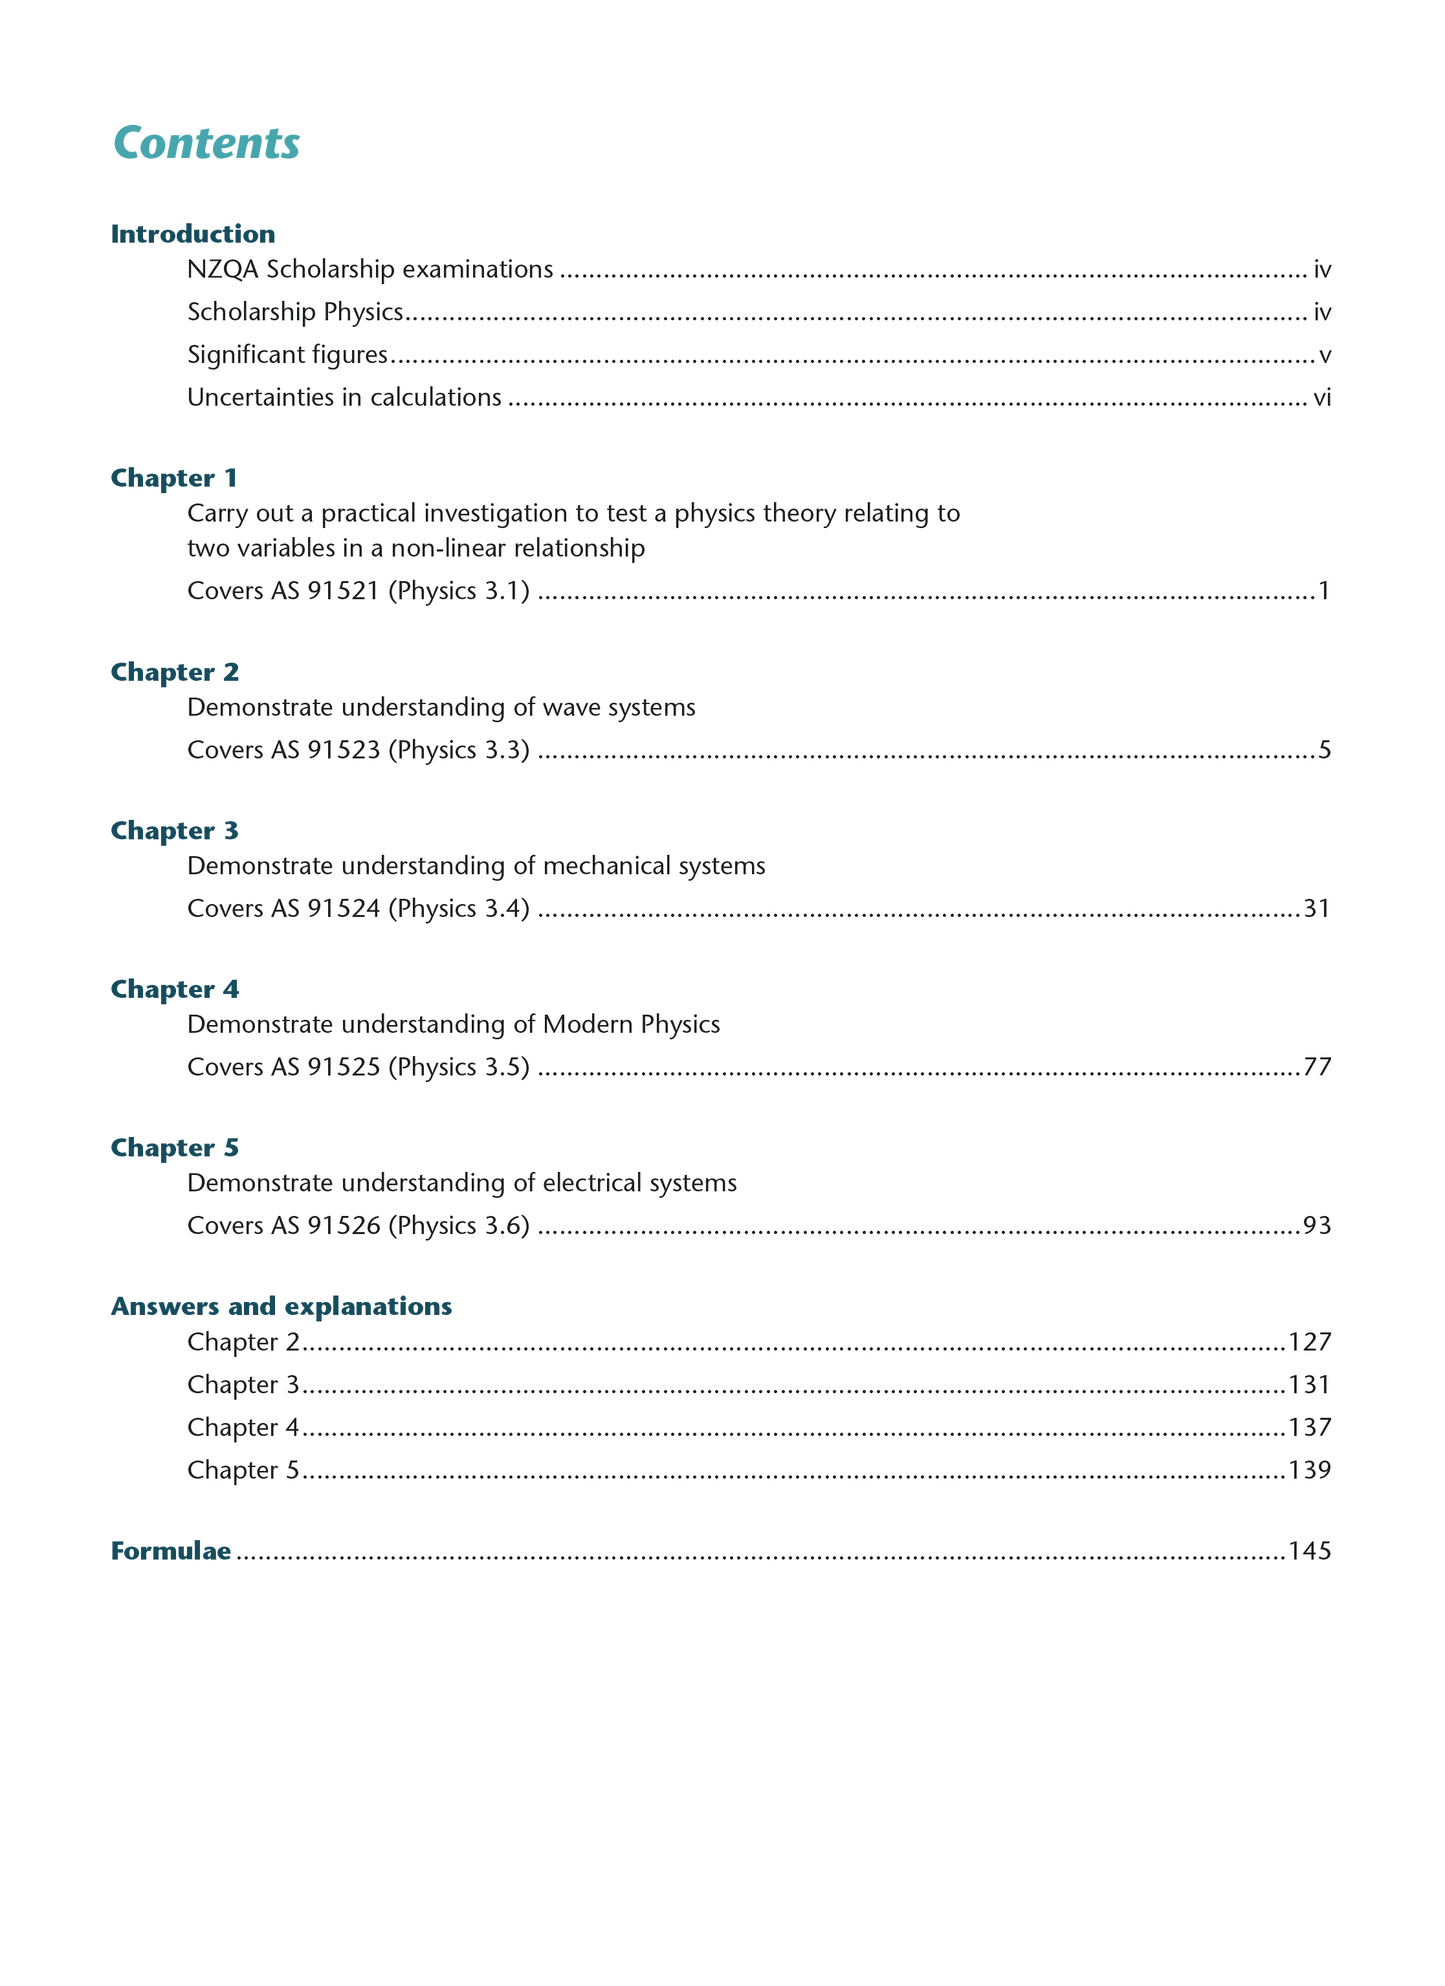 Scholarship Physics AME Workbook